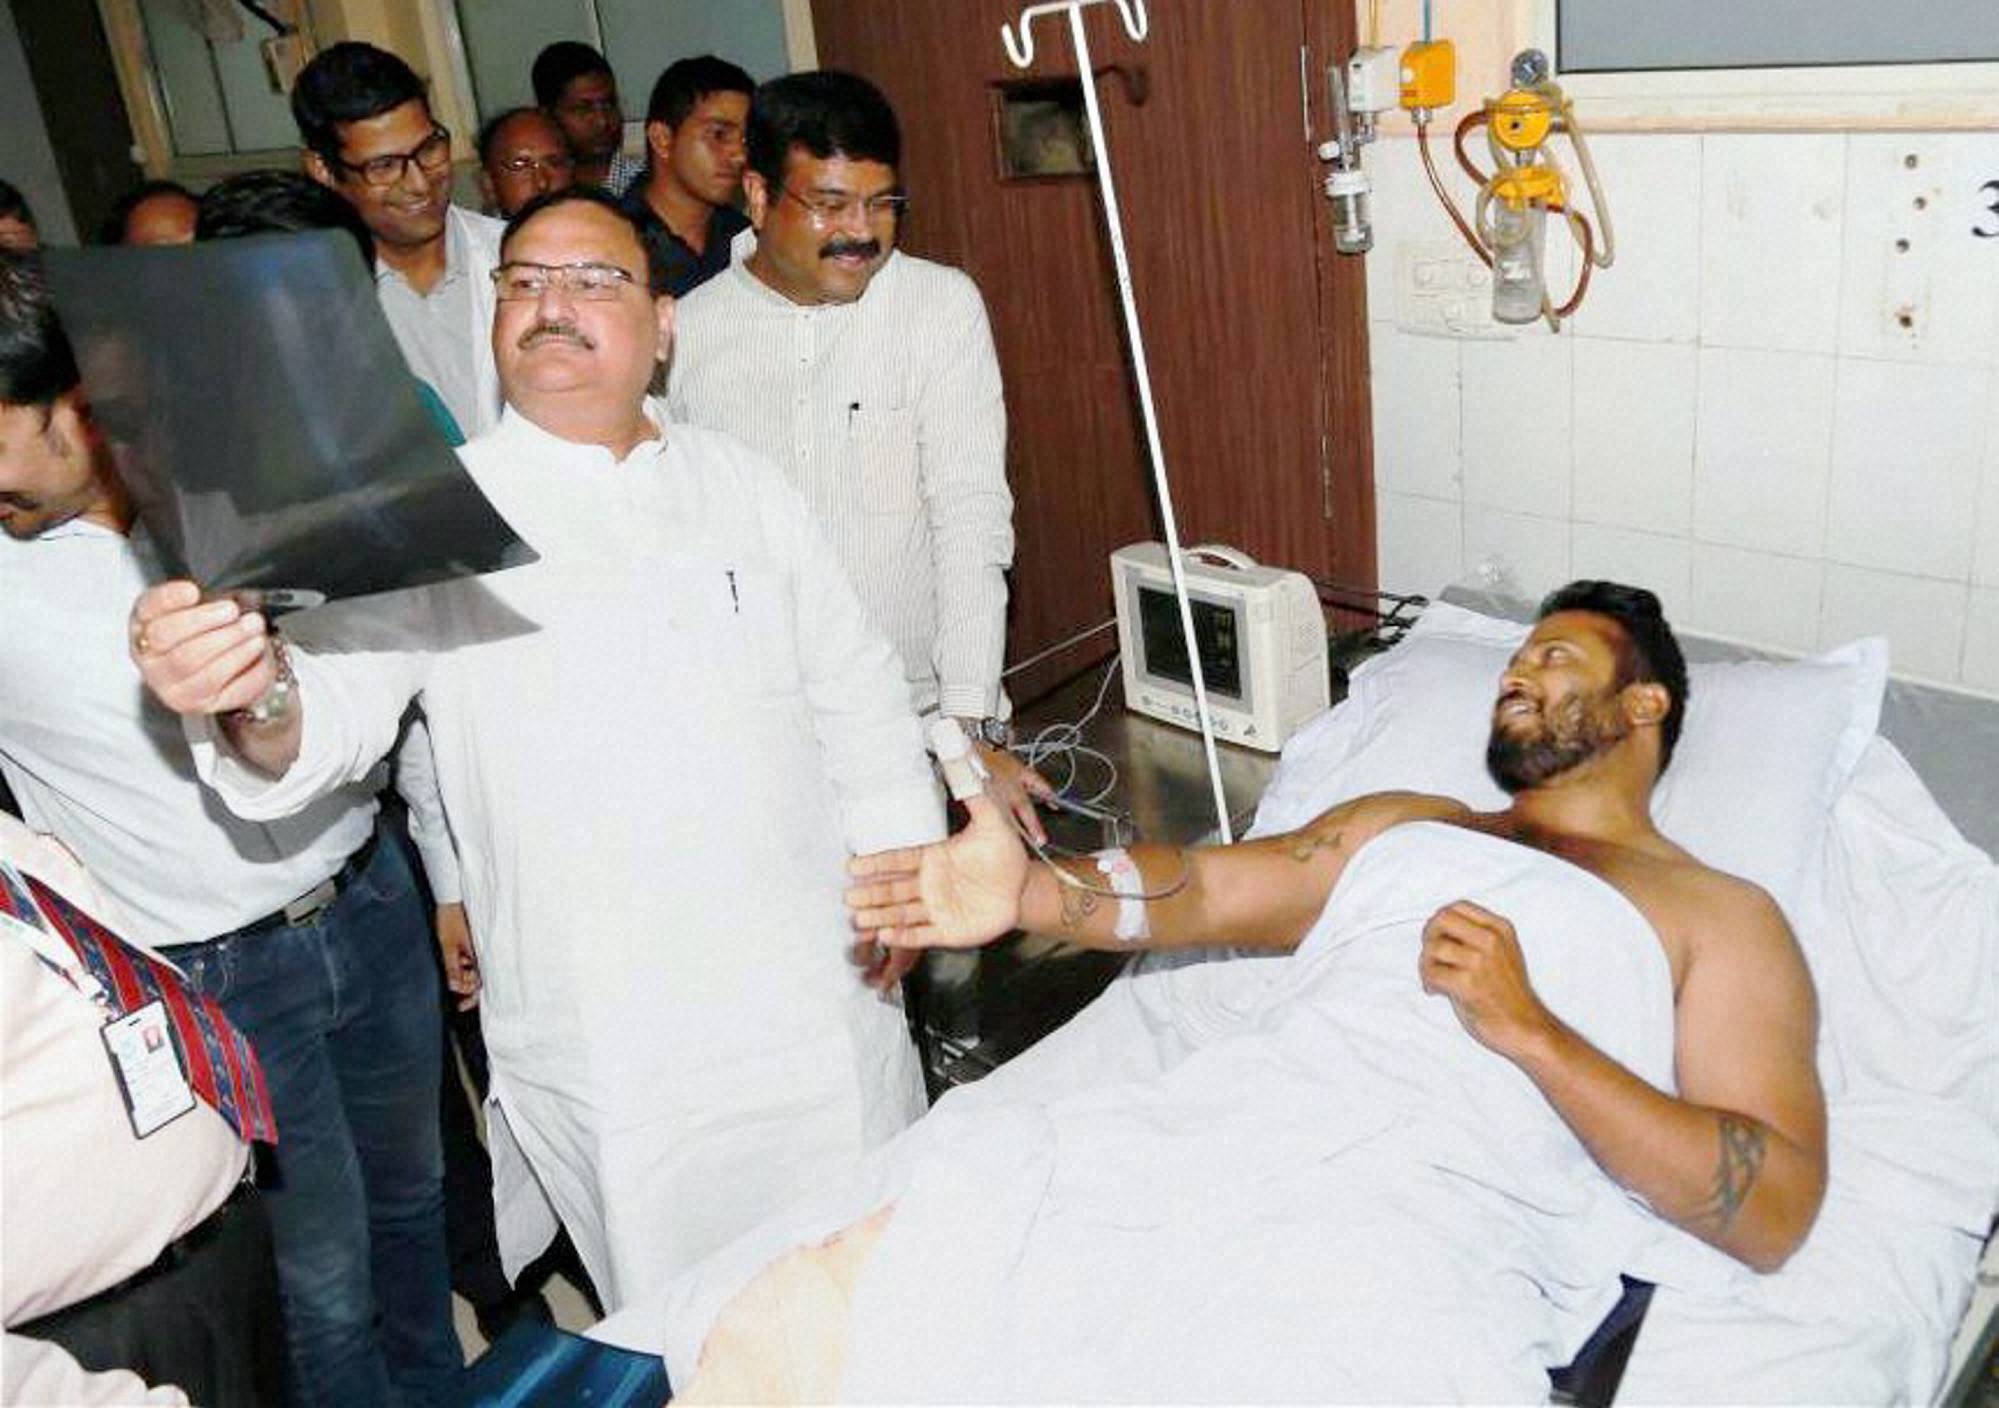 Odisha's tragedy-hit hospital had no fire clearance